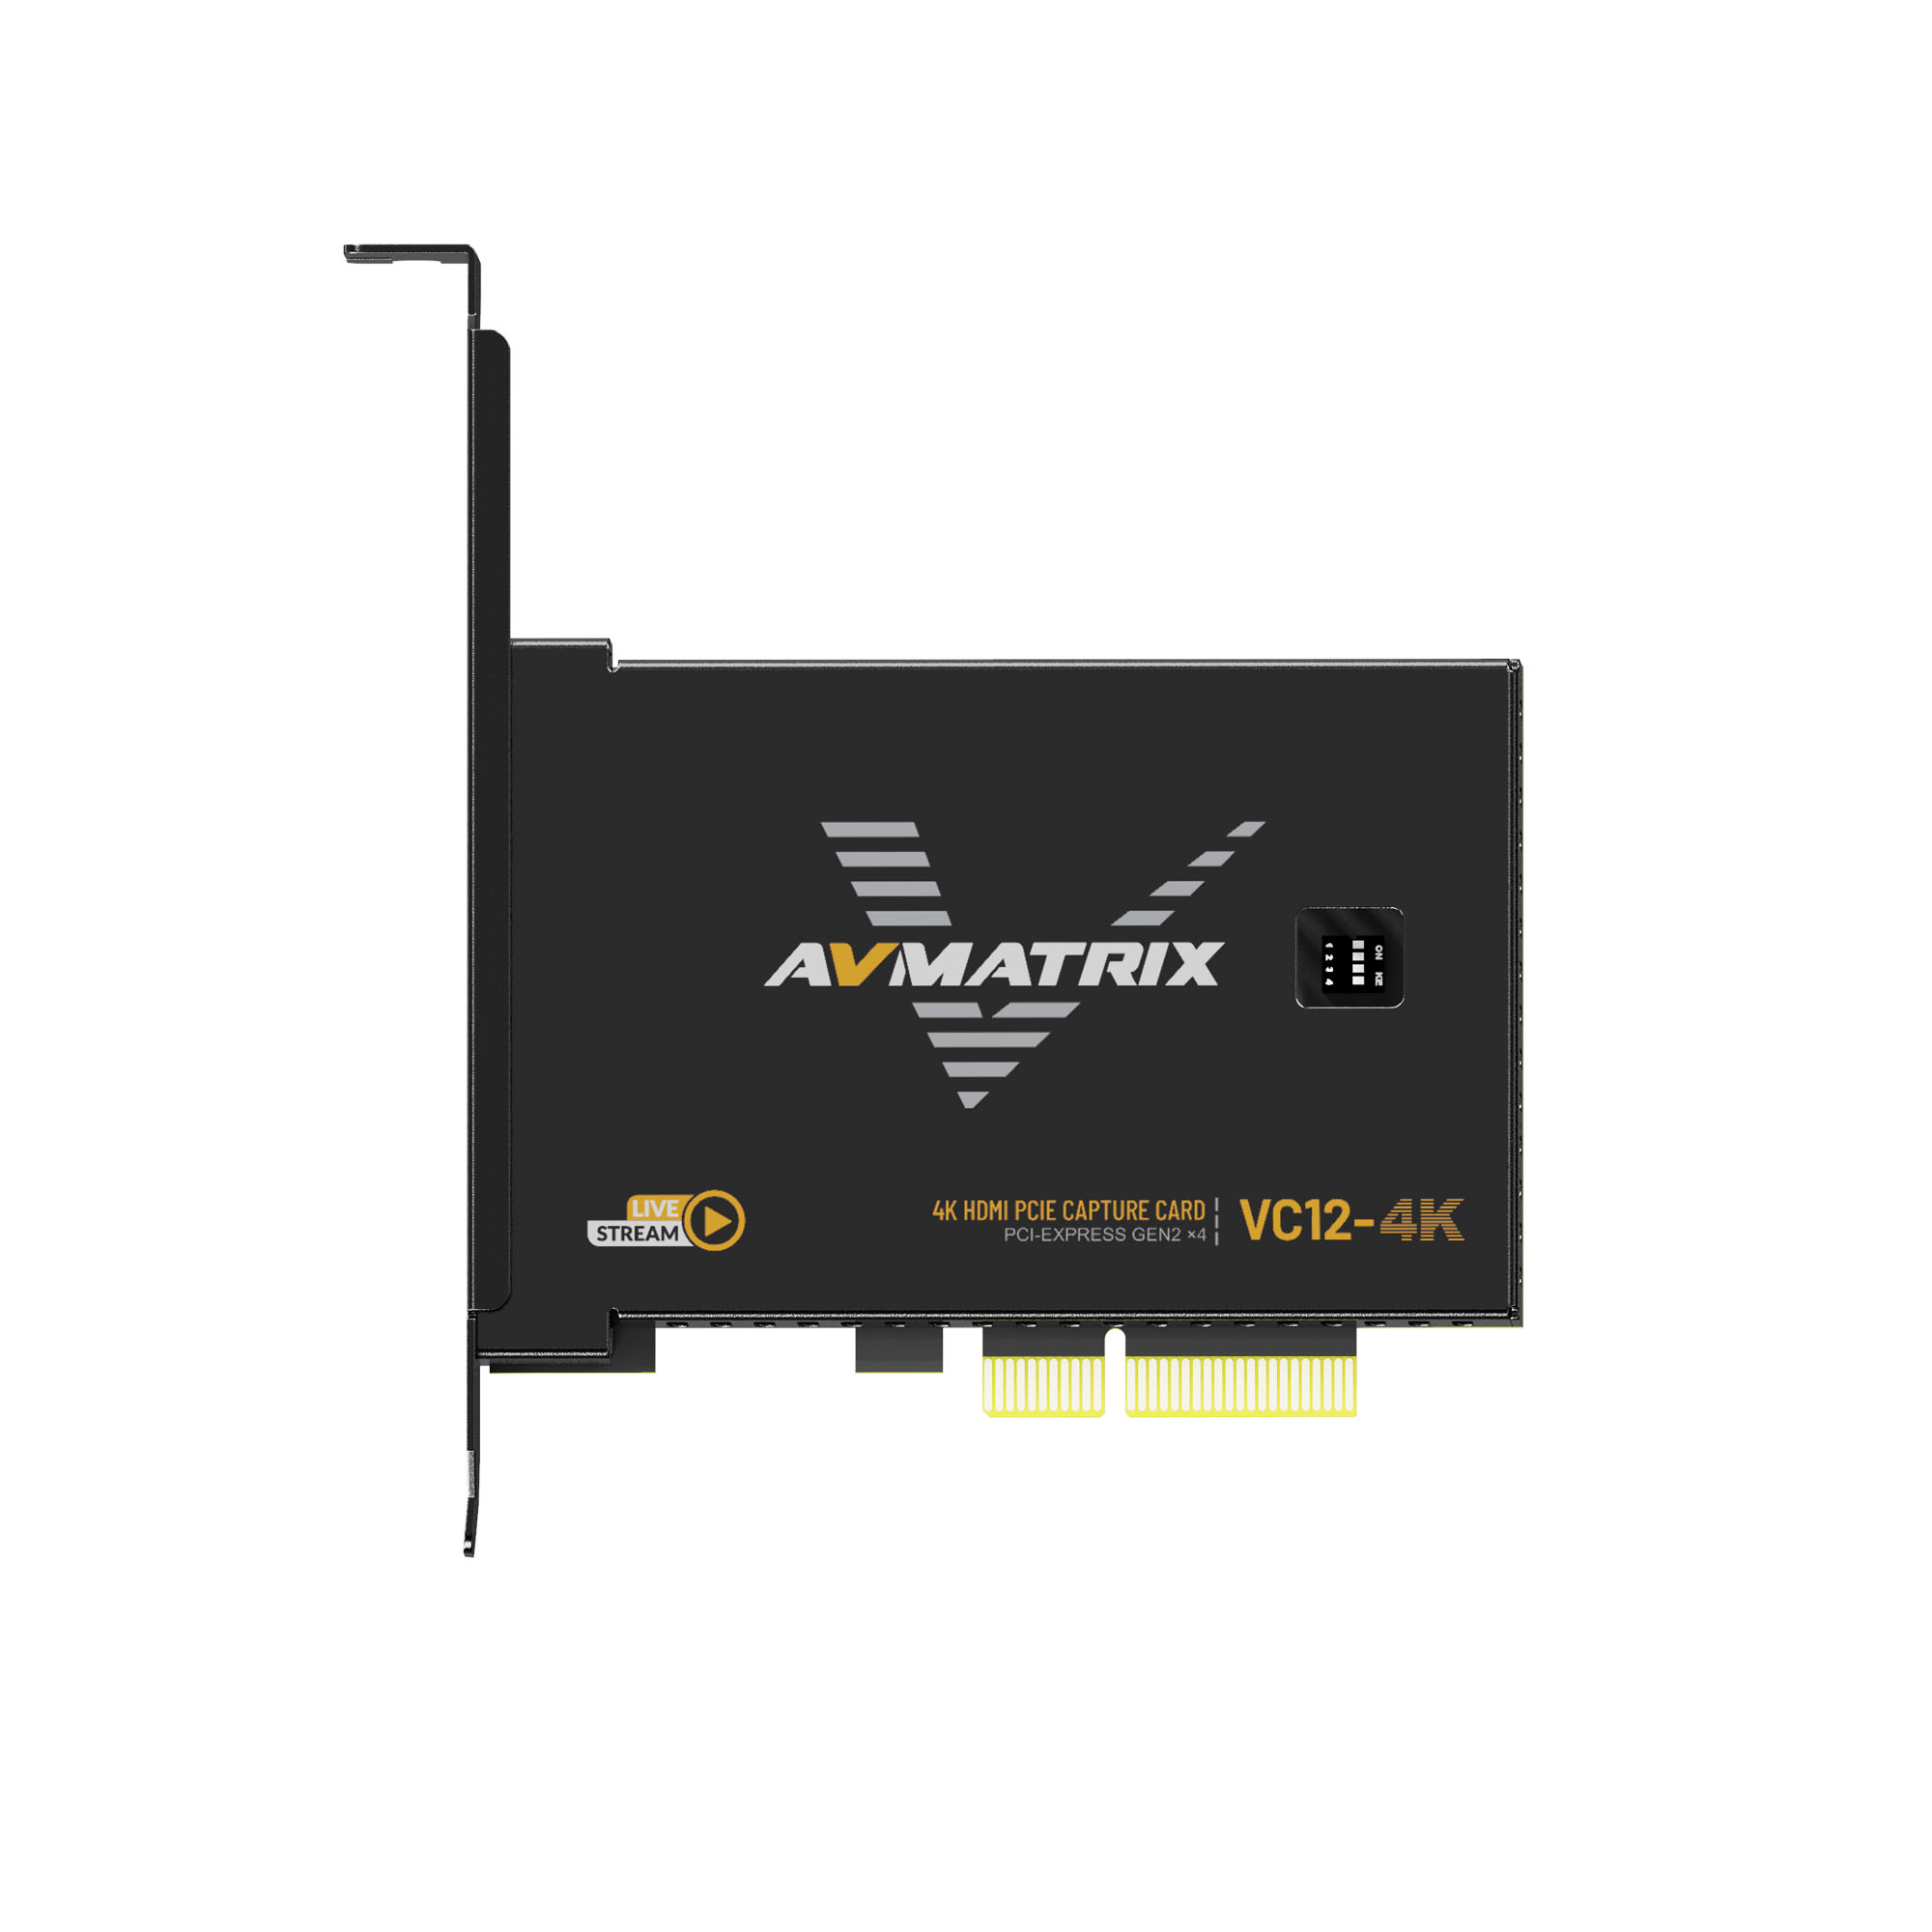 VC12-4K HDMI PCIE плата видеозахвата AVMatrix